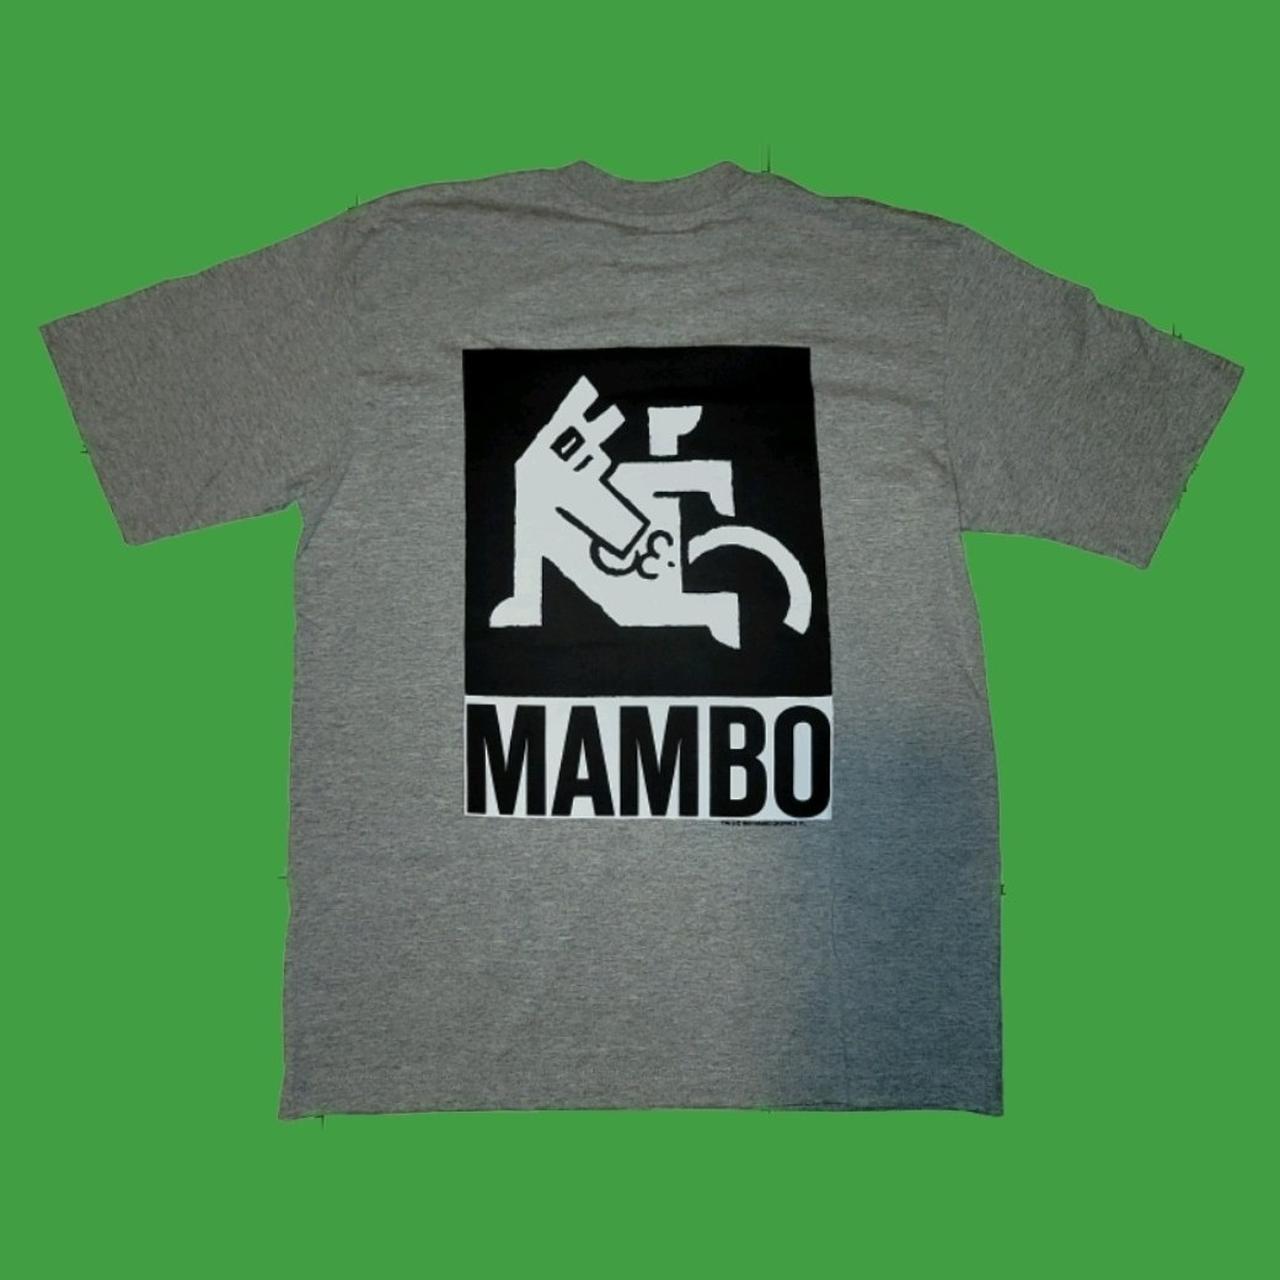 Product Image 1 - Vintage MAMBO Australian 1989 shirt!
Like